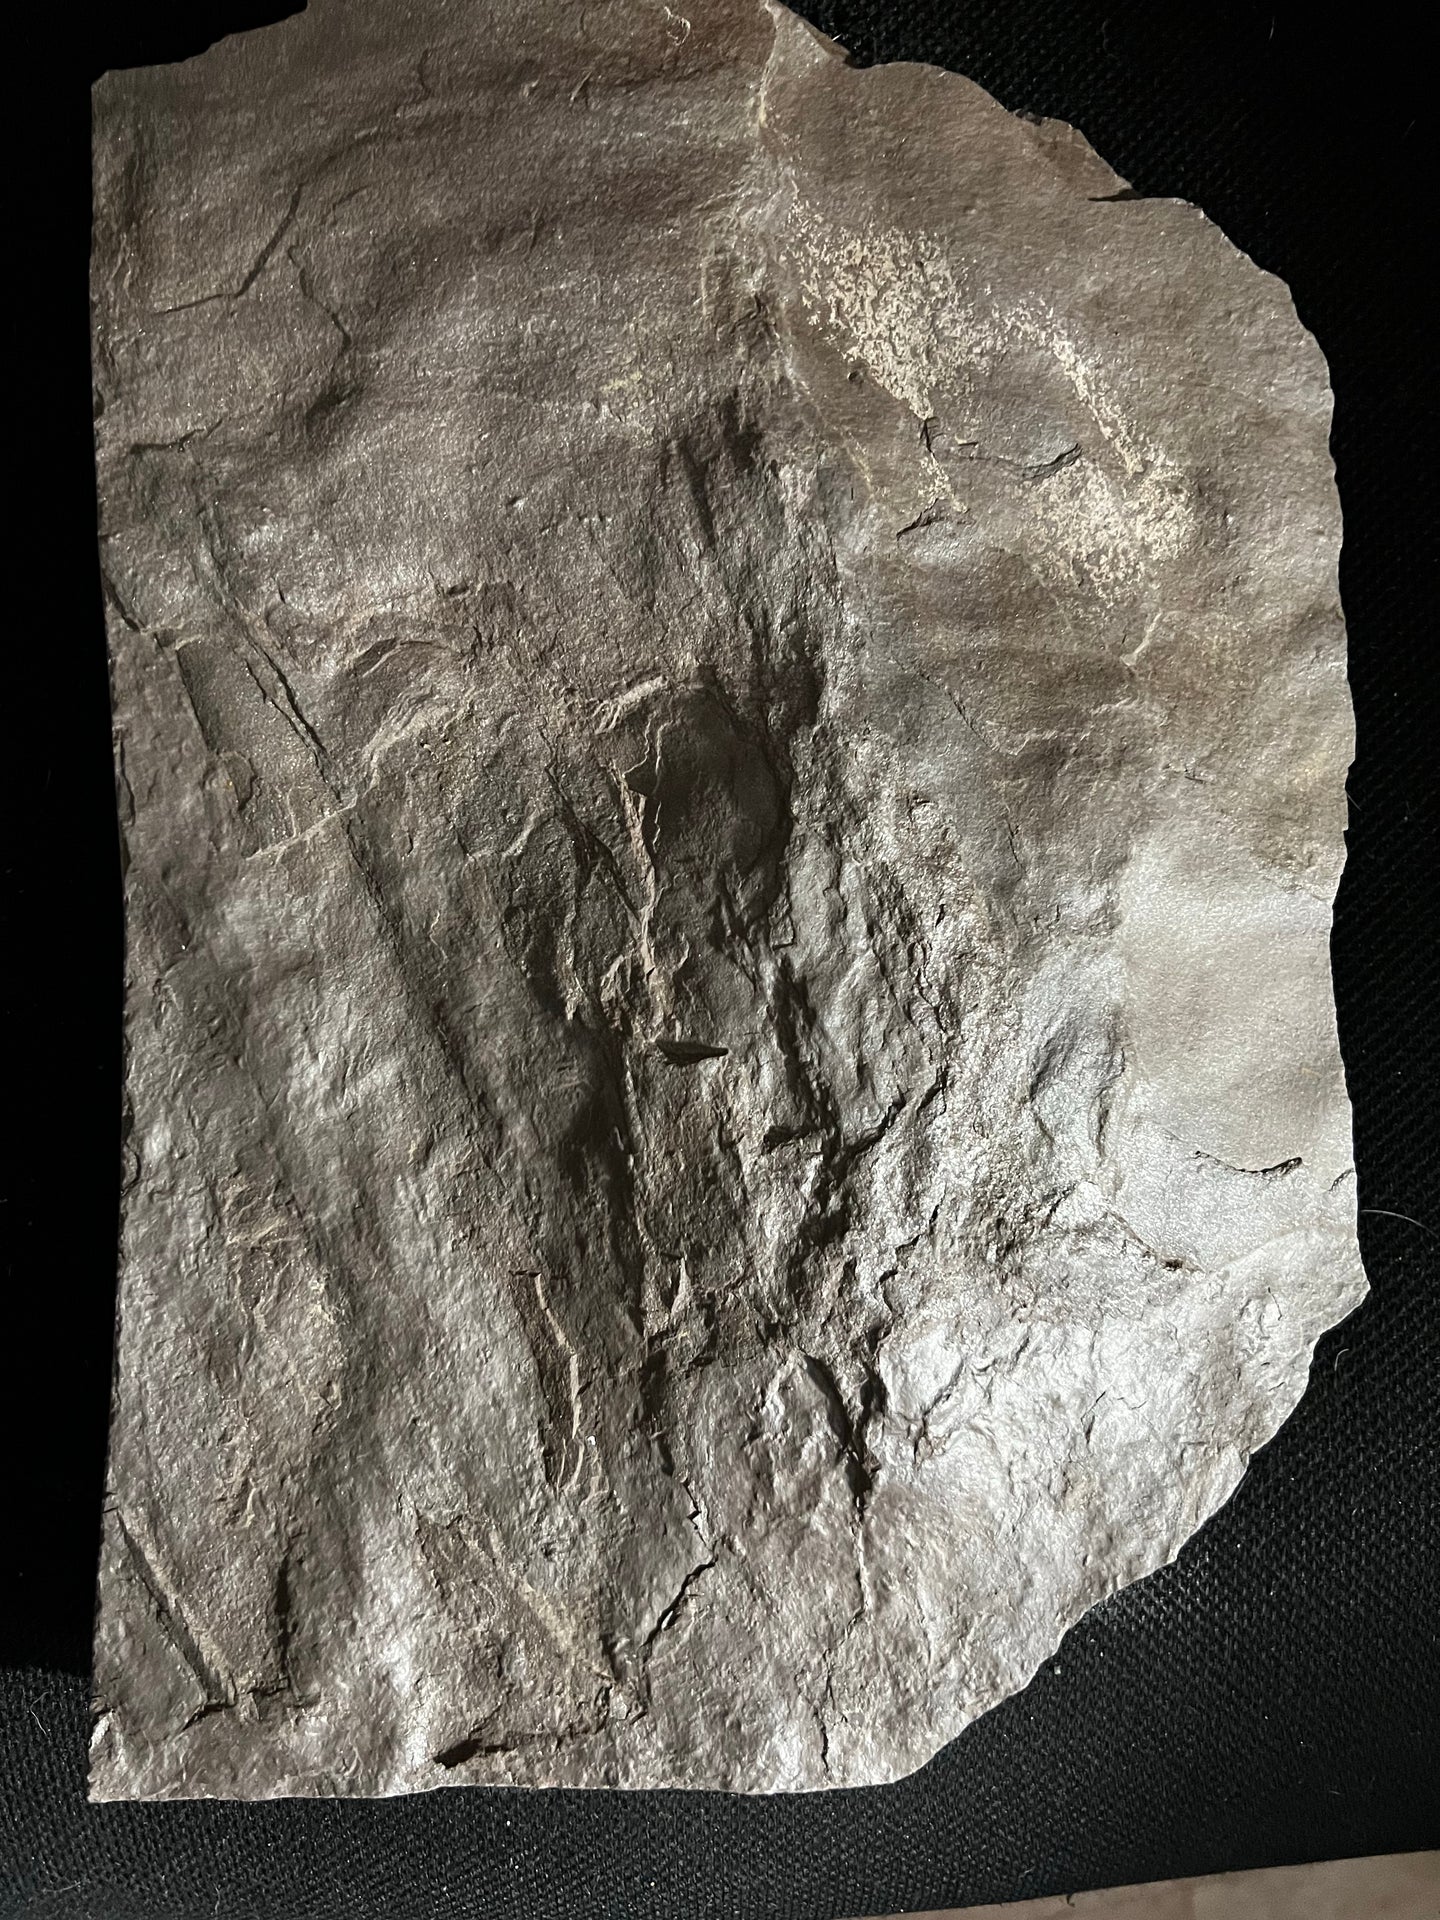 Raised Fossil Grallator Dinosaur Footprint